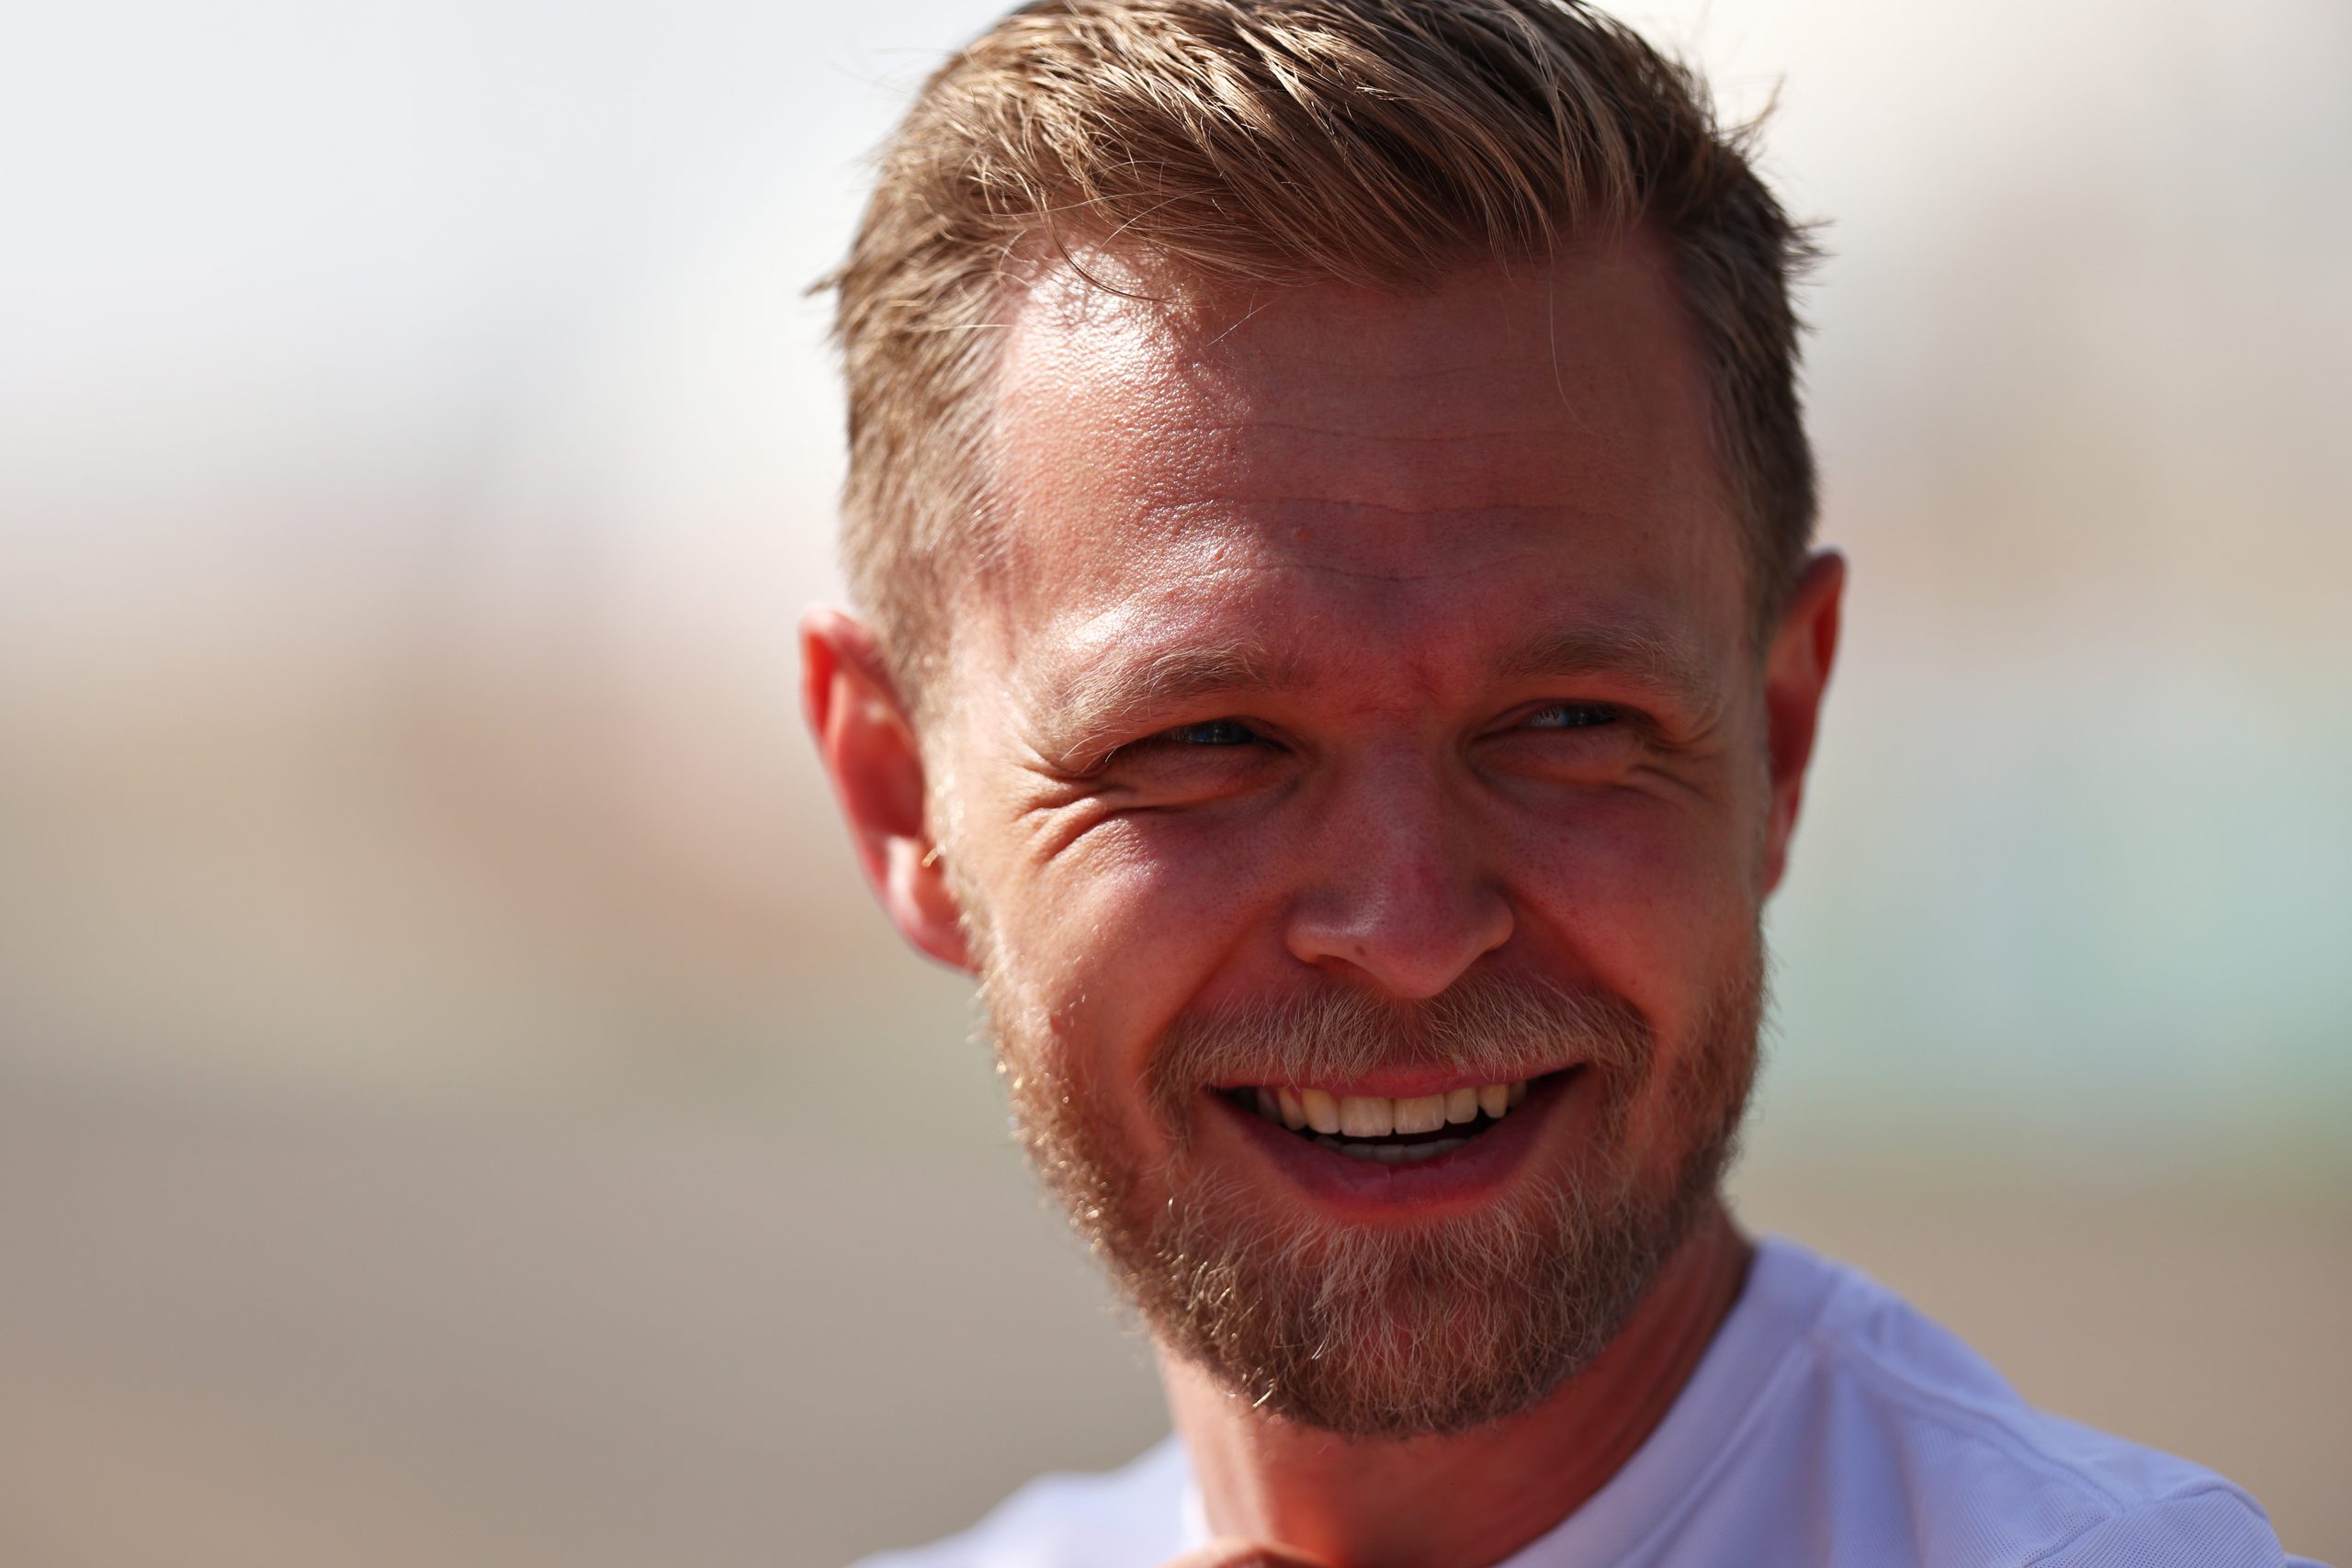 Kevin Magnussen is back in F1